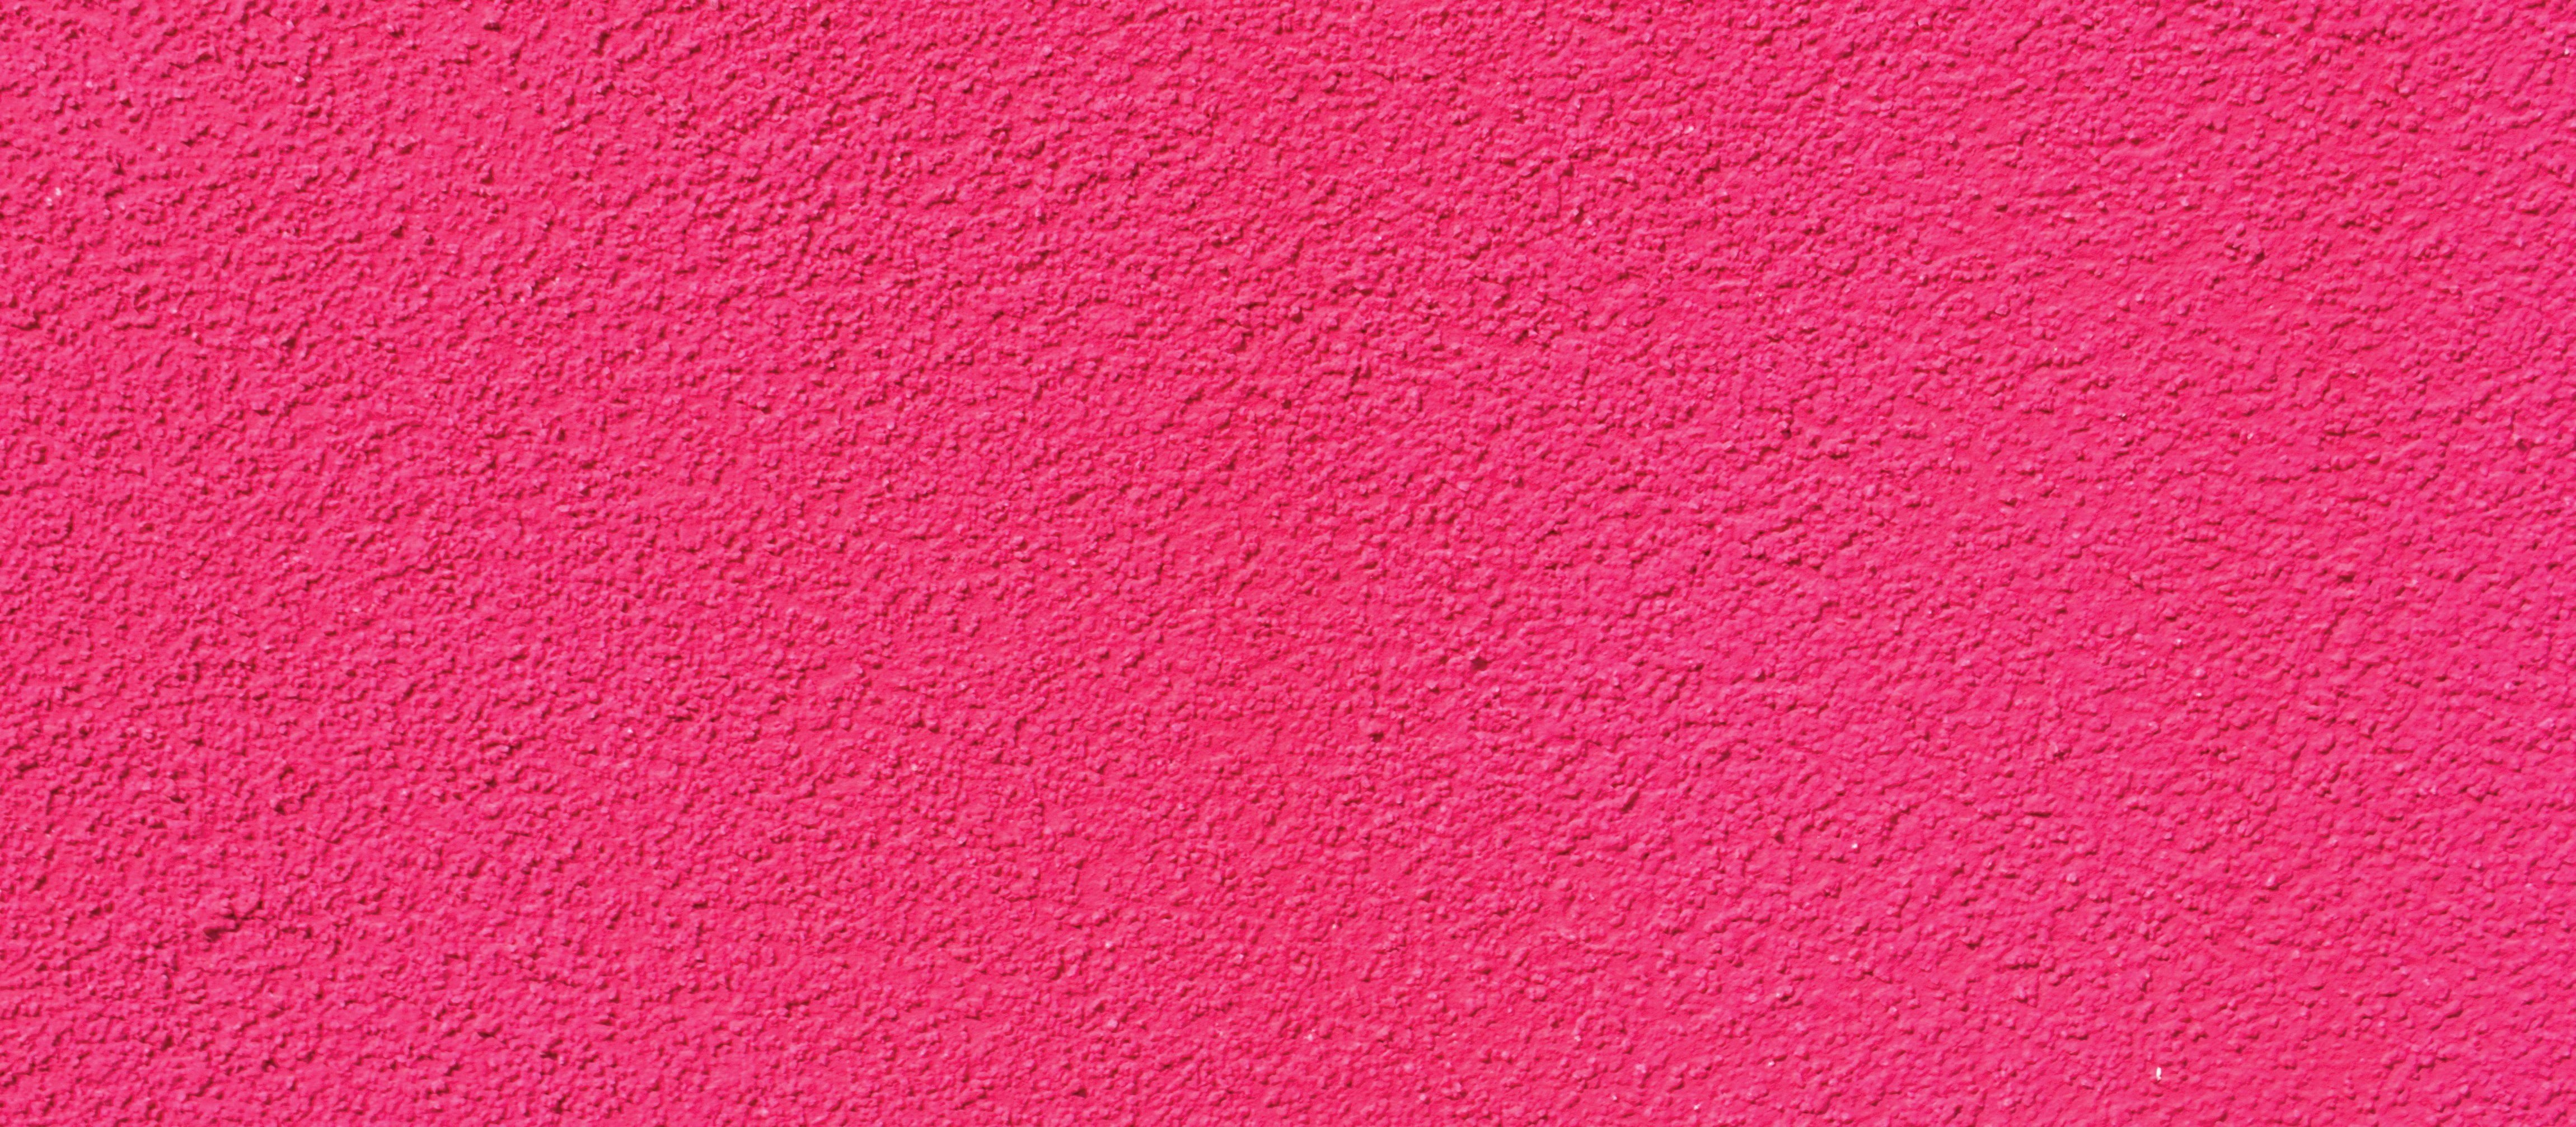 Bumpy Pink Wall 